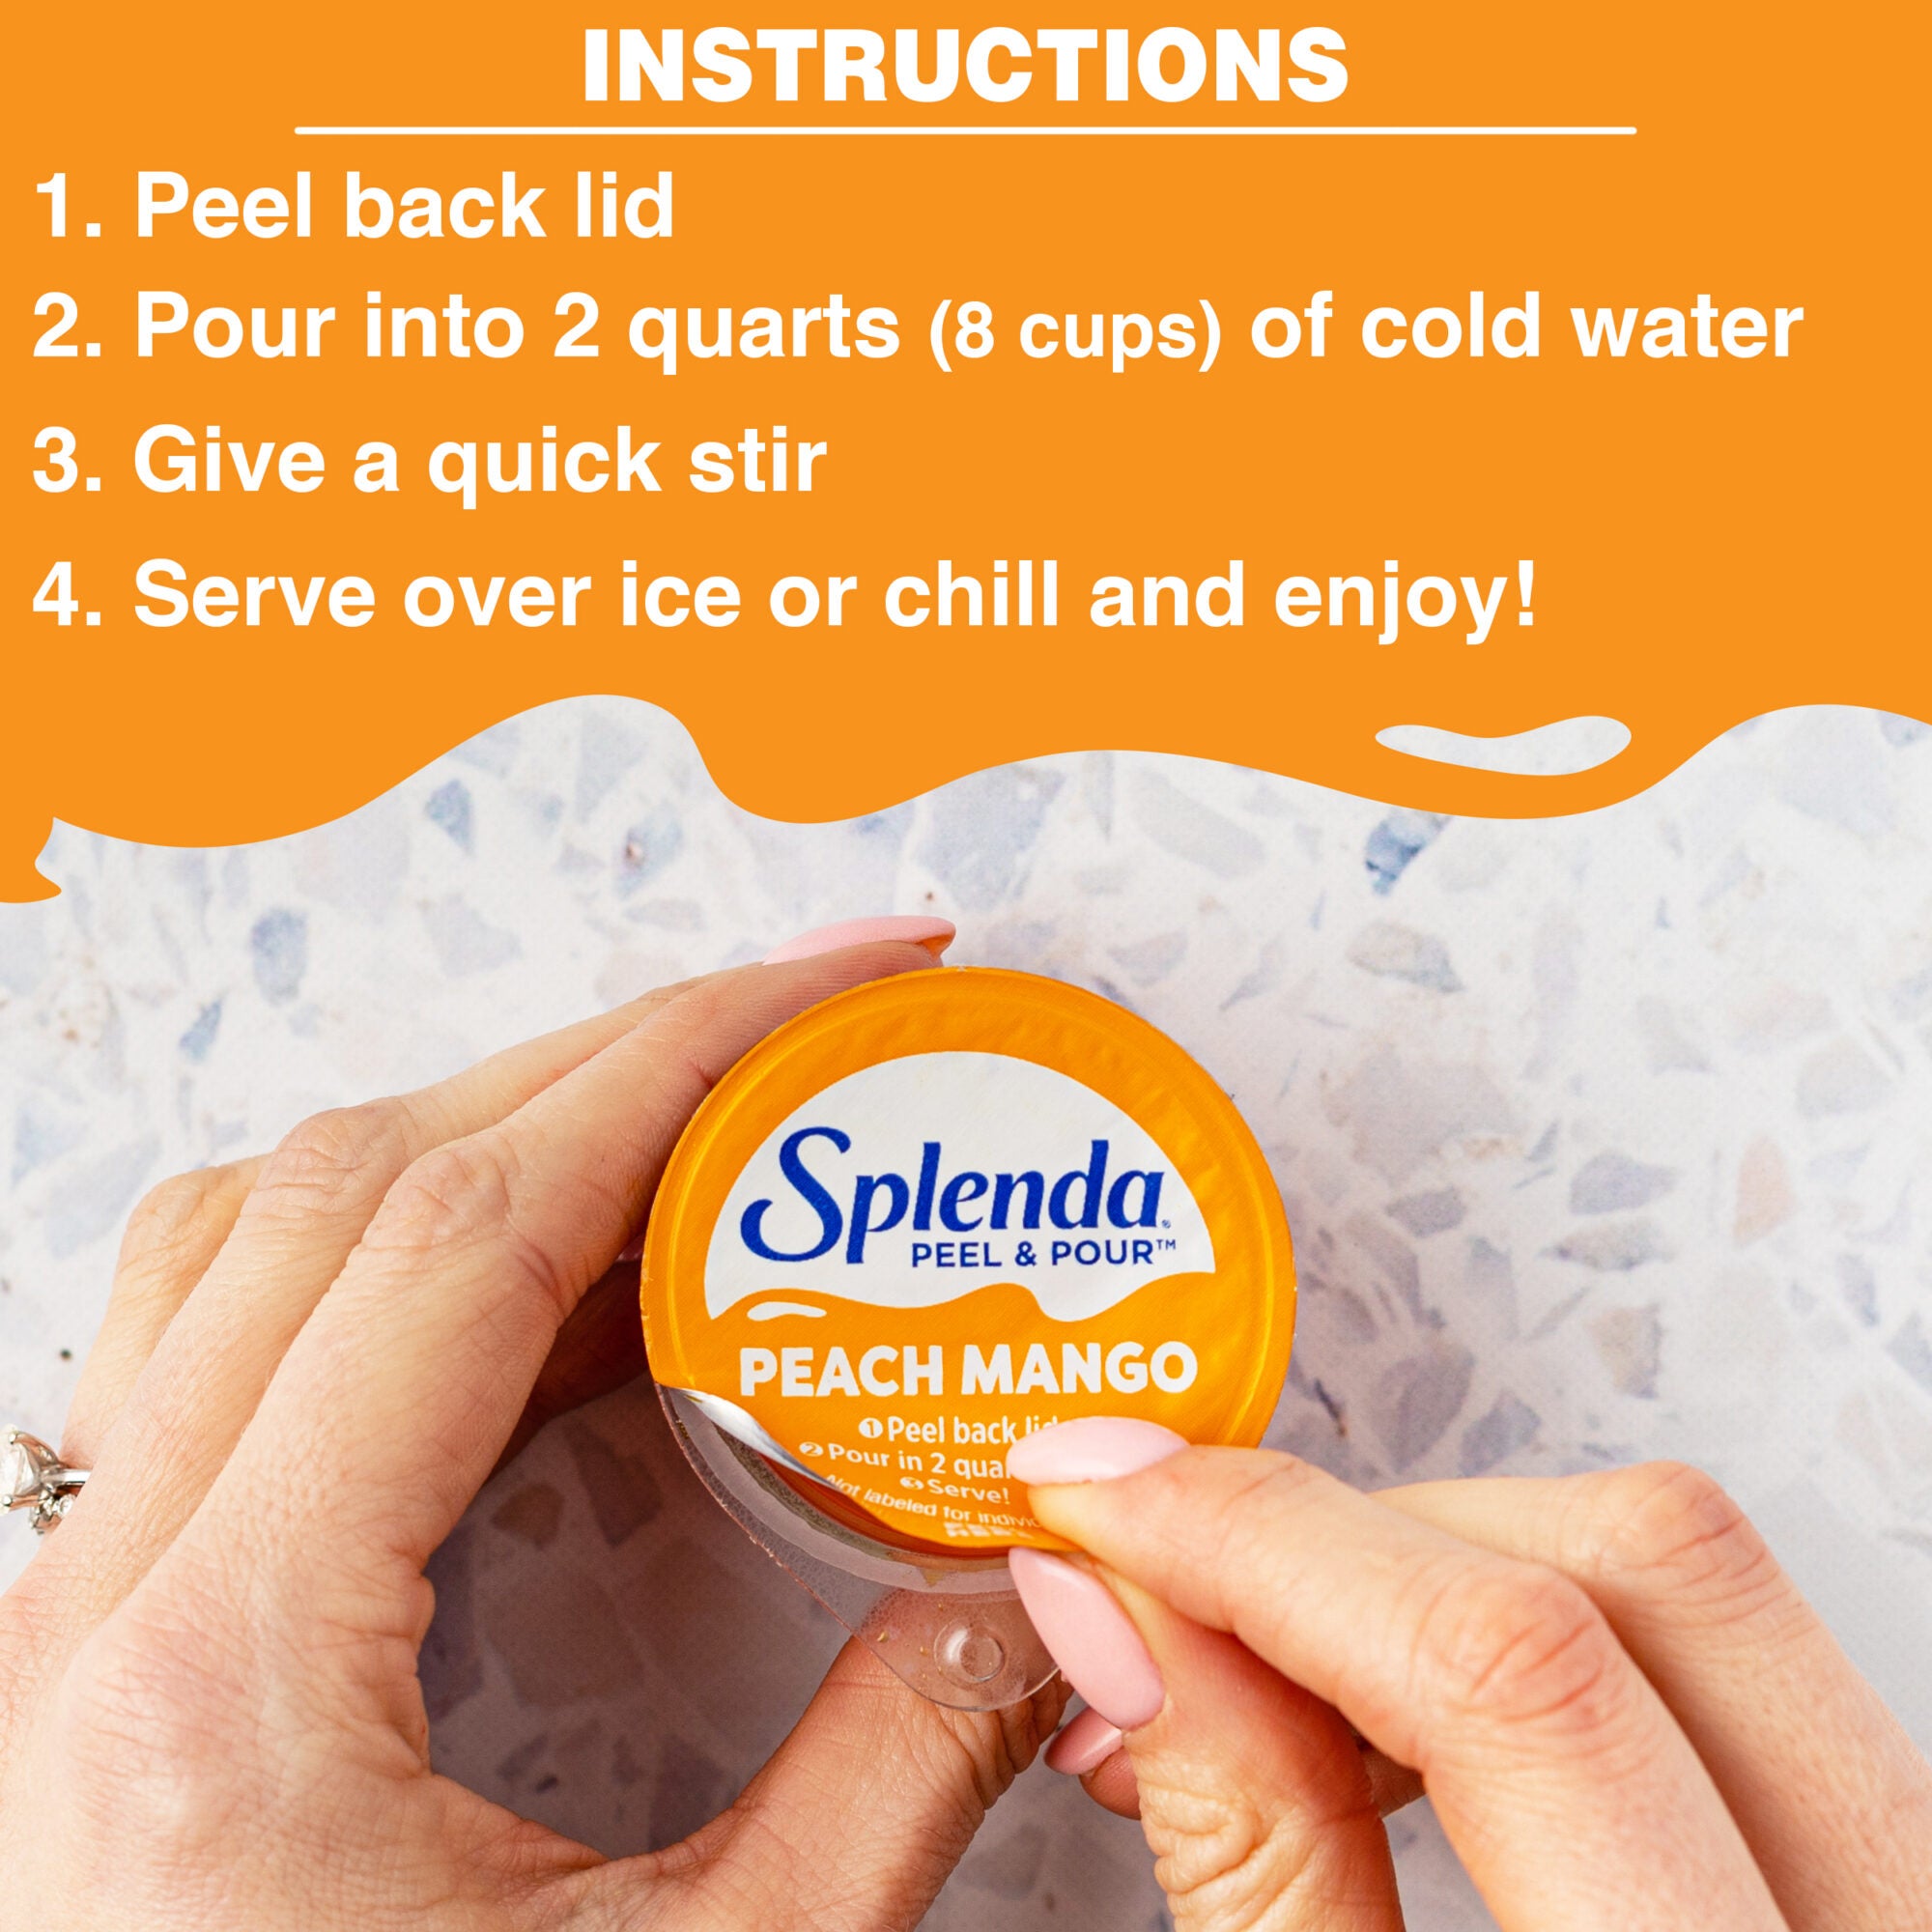 Splenda Peel & Pour Peach Mango Zero Sugar Drink Mix – Instructions